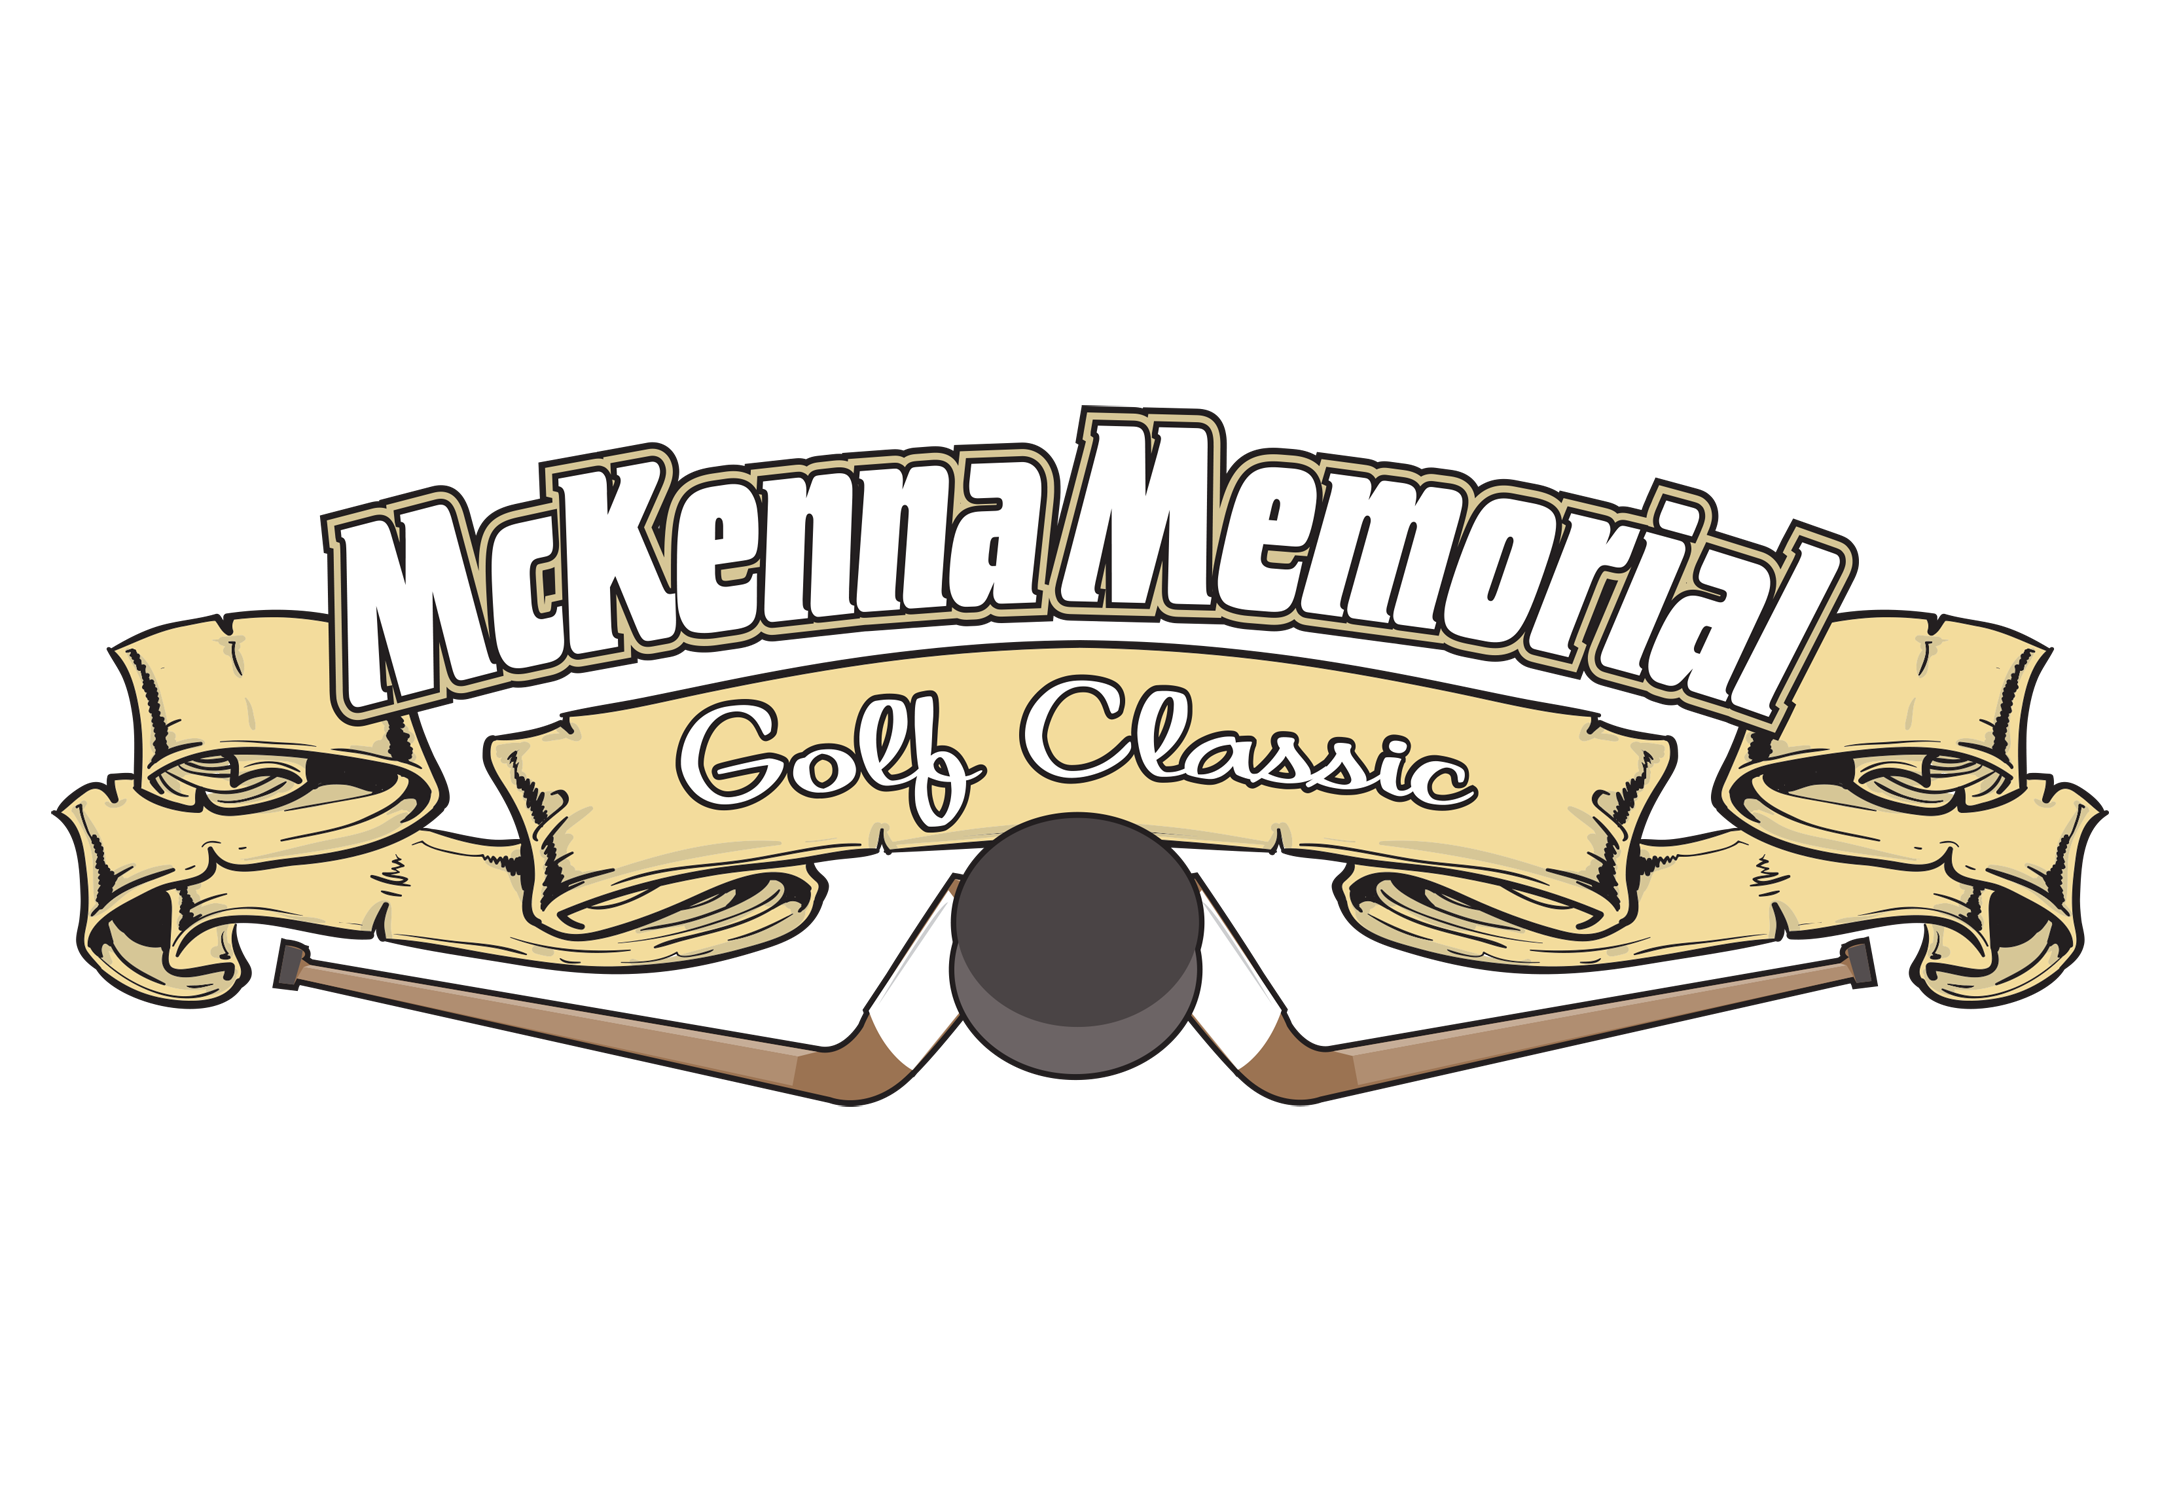 2022 Bill McKenna Memorial Golf Classic